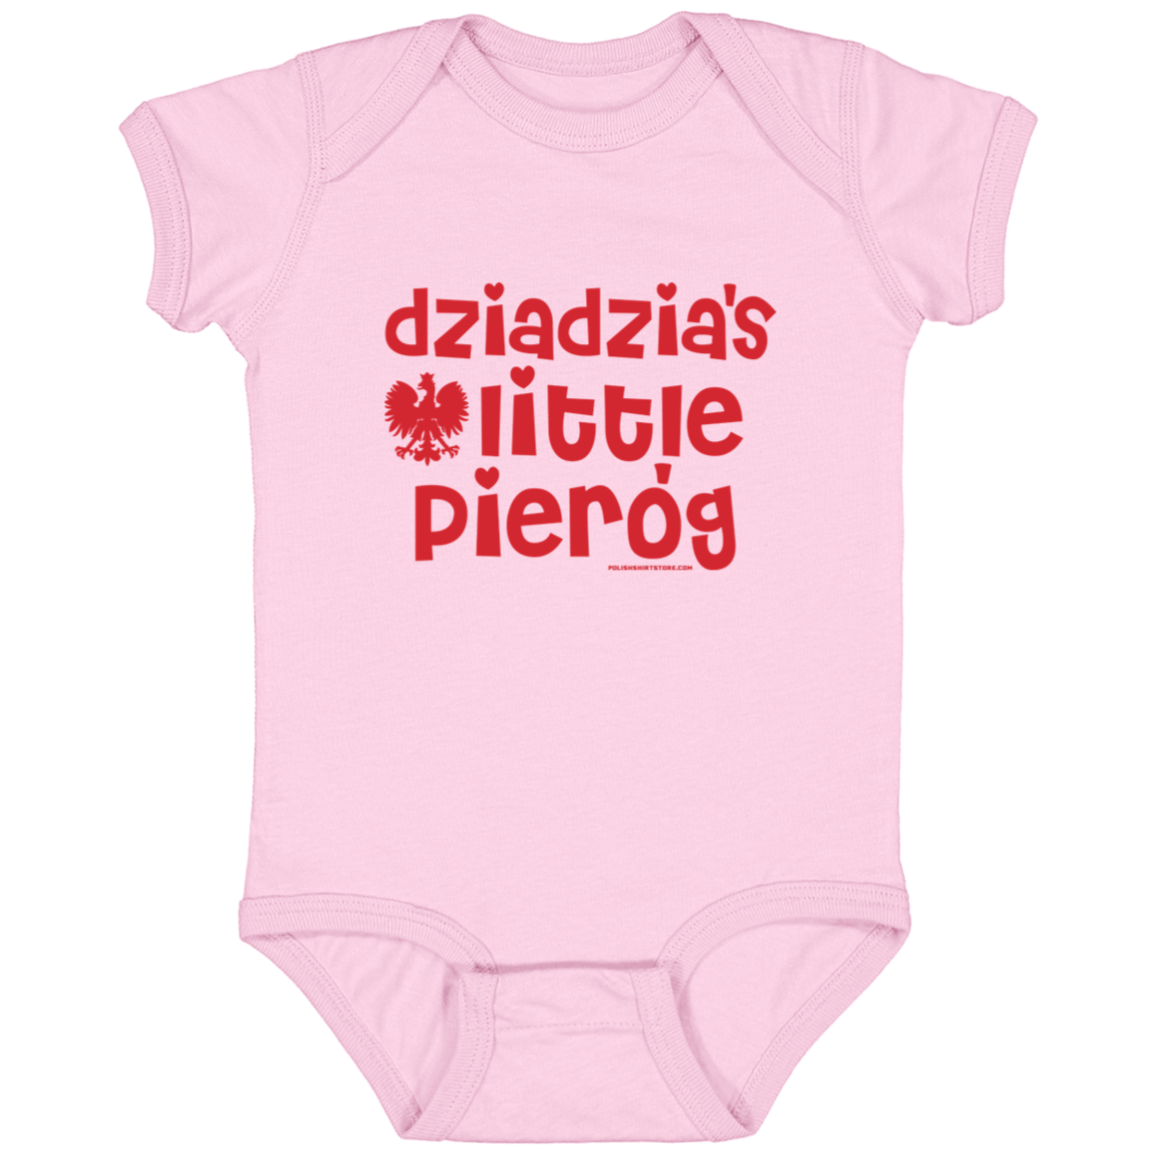 Dziadzia's Little Pierogi Infant Bodysuit Baby CustomCat Pink Newborn 